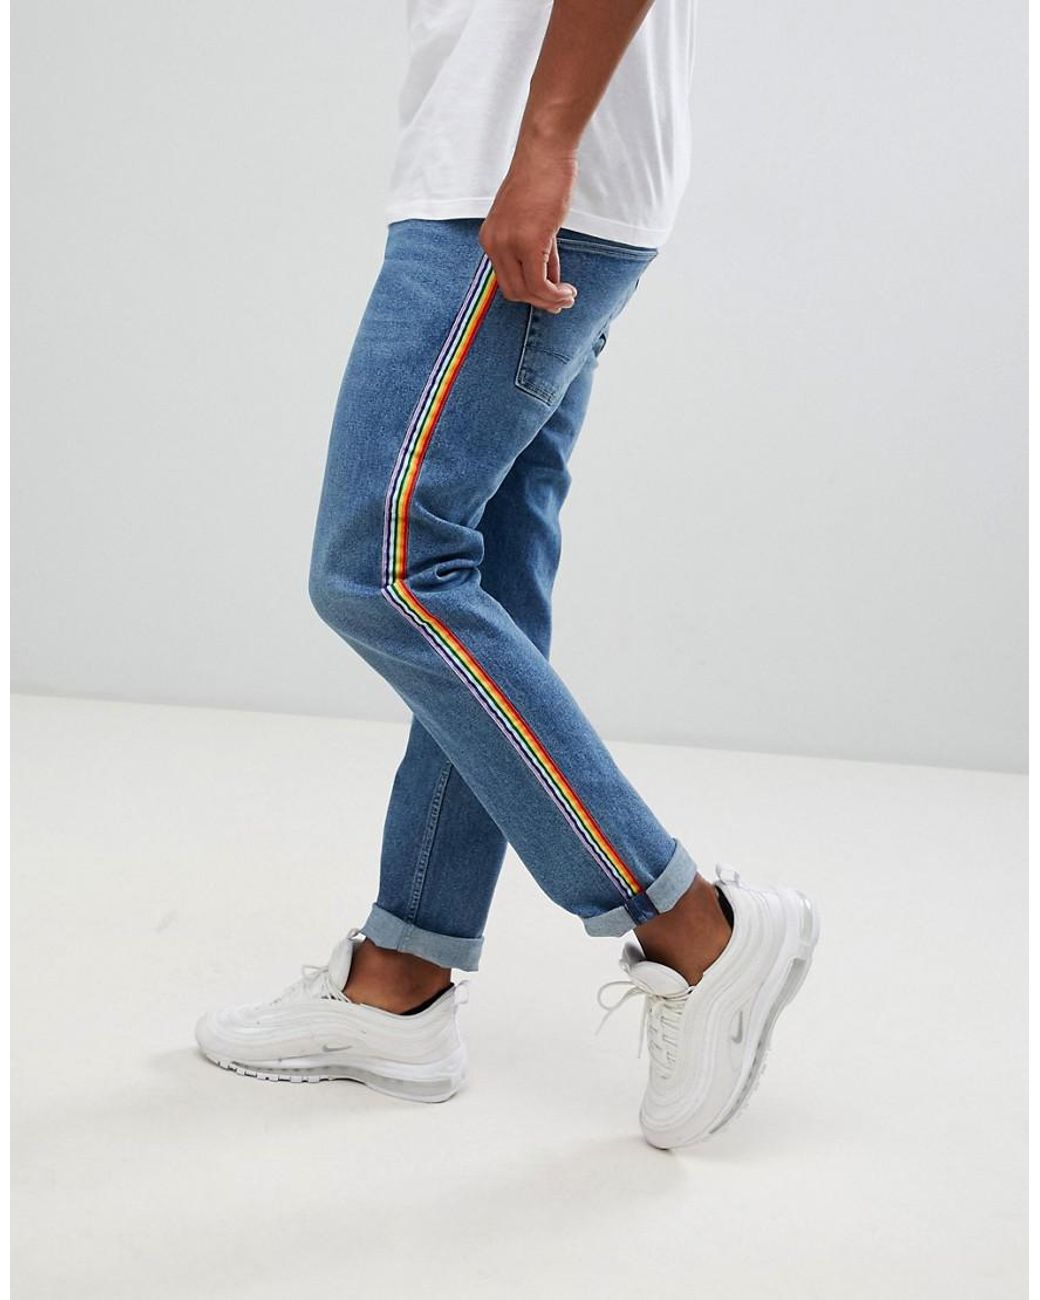 ASOS Denim Slim Jeans In Mid Wash Blue With Rainbow Stripe for Men - Lyst